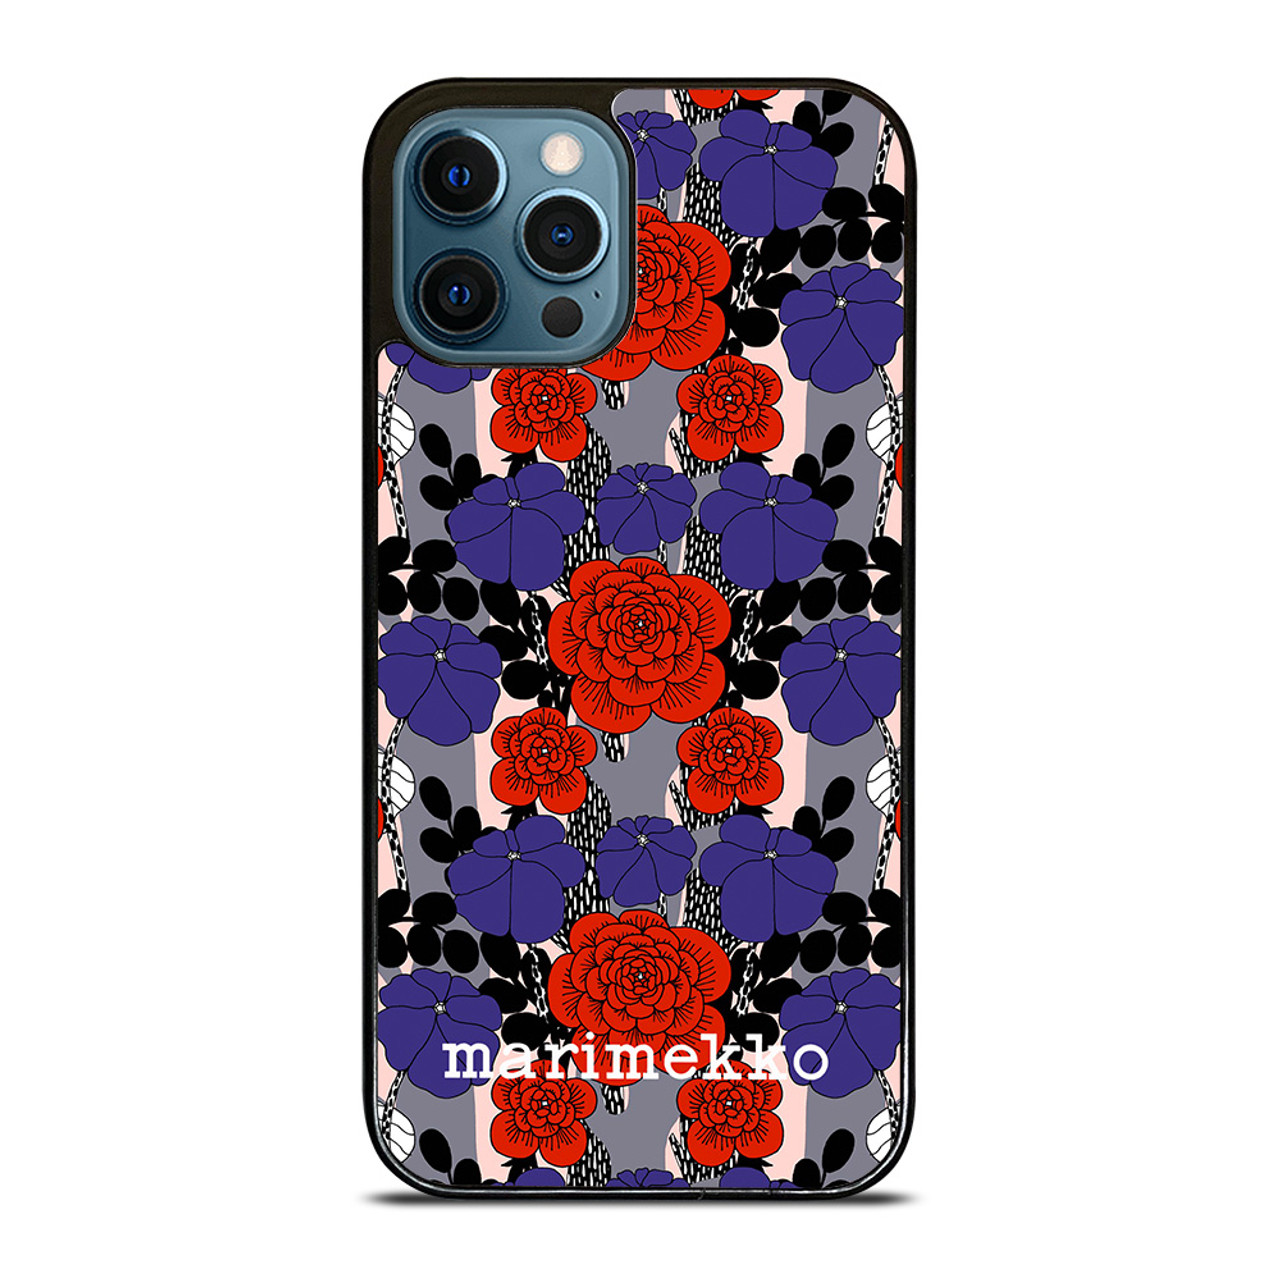 Marimekko Unelma Iphone 12 Pro Case Cover